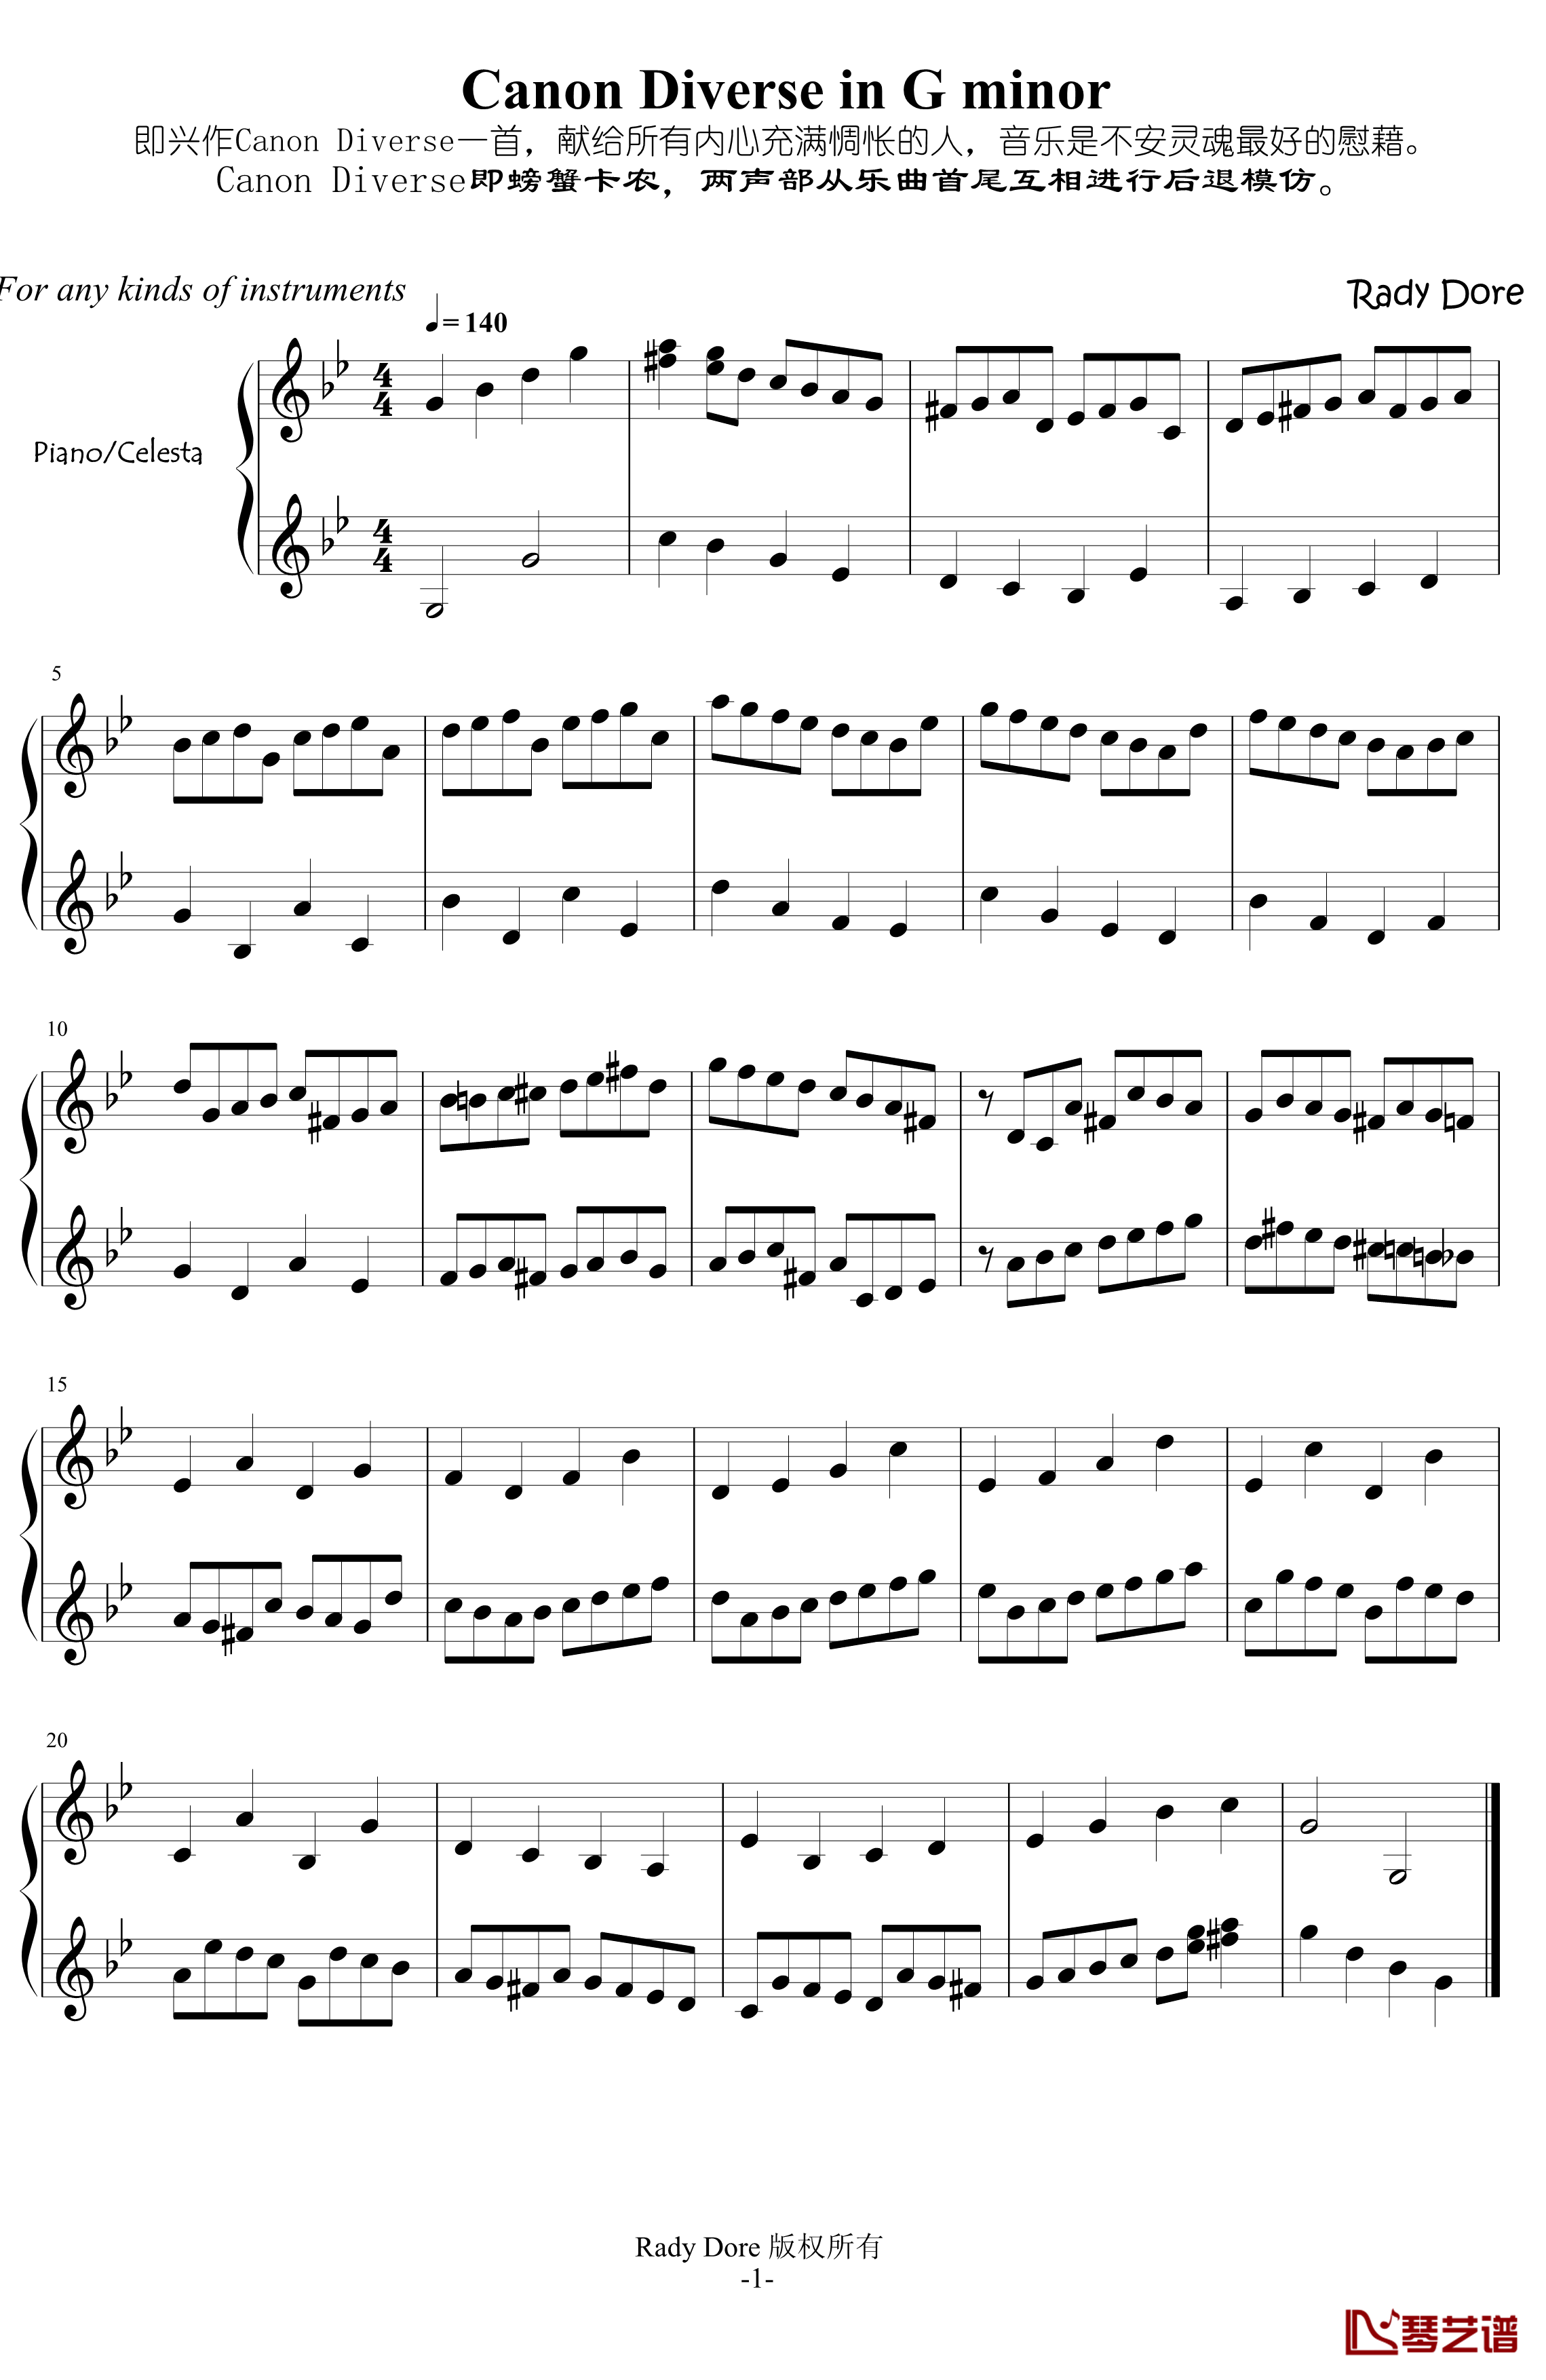 Canon Diverse in G minor钢琴谱-舍勒七世1